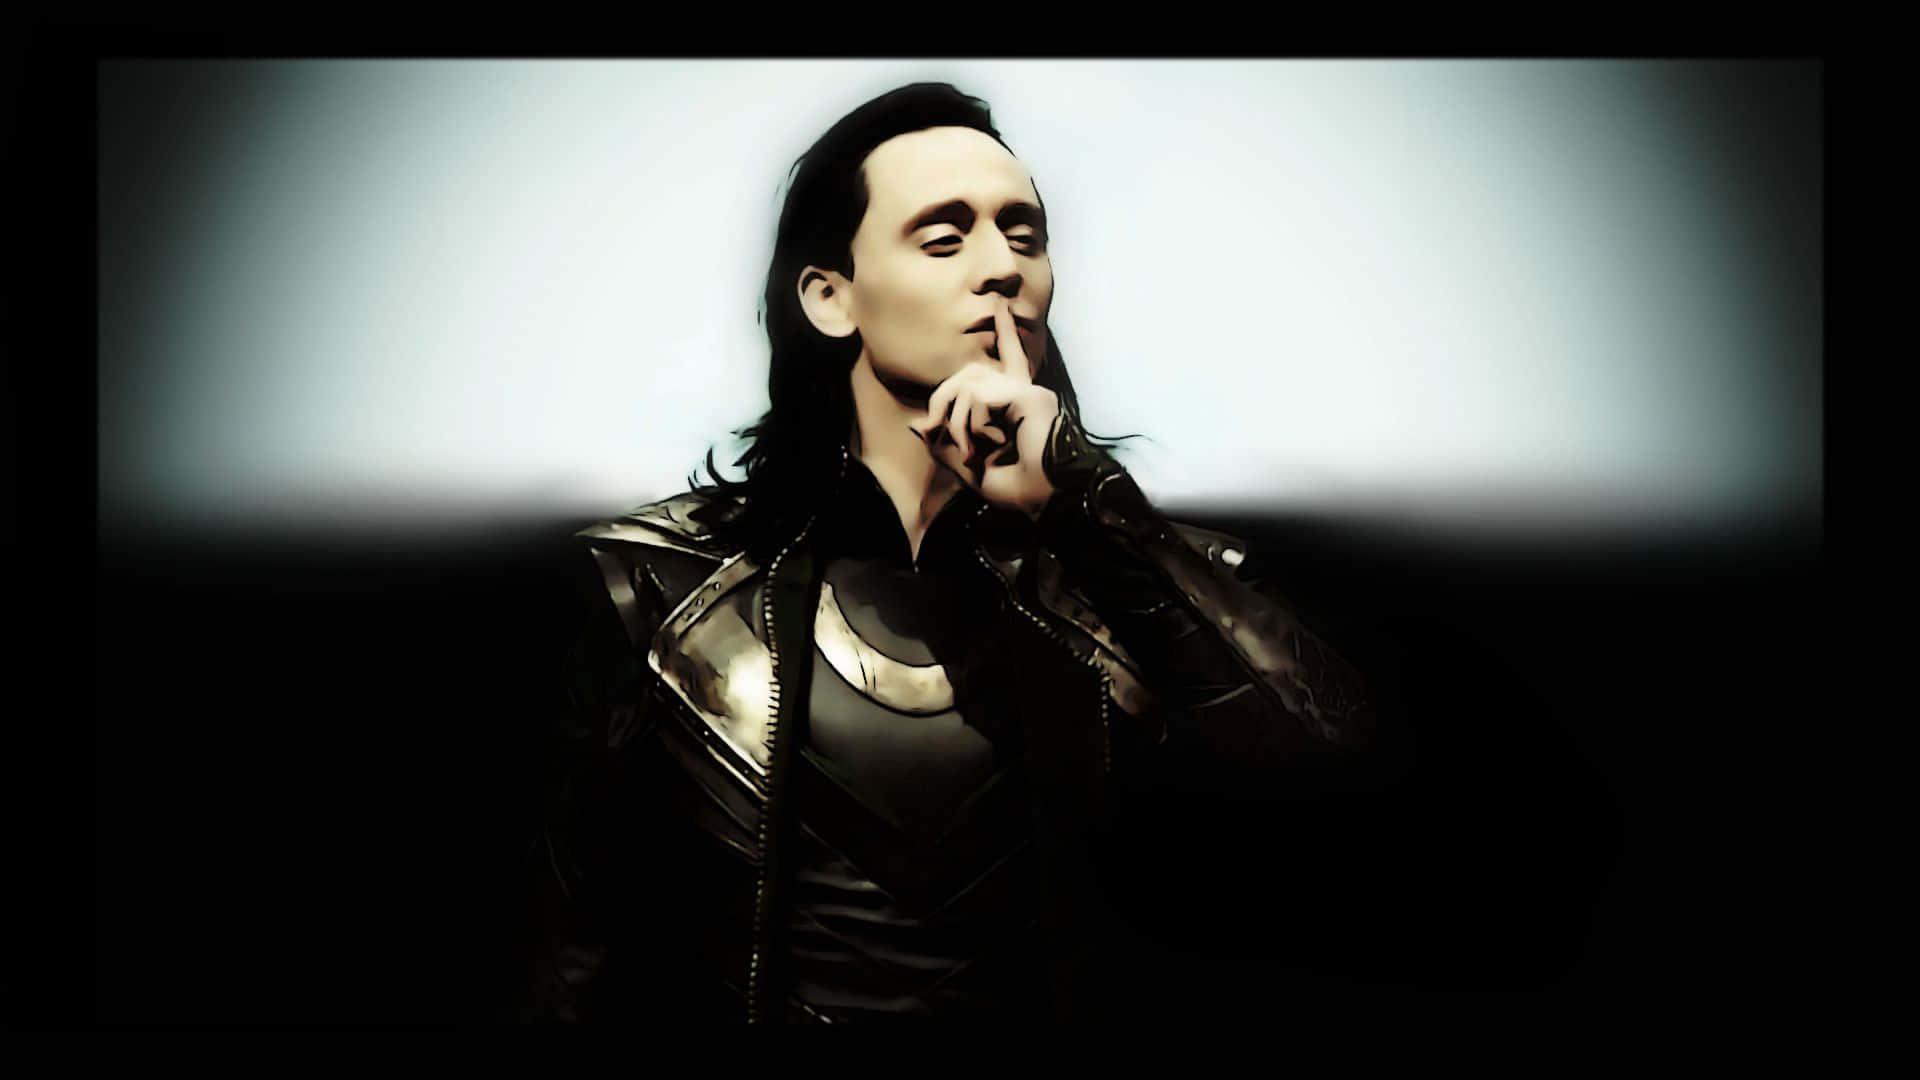 Loki,den Skojfriske Marvel-karaktären